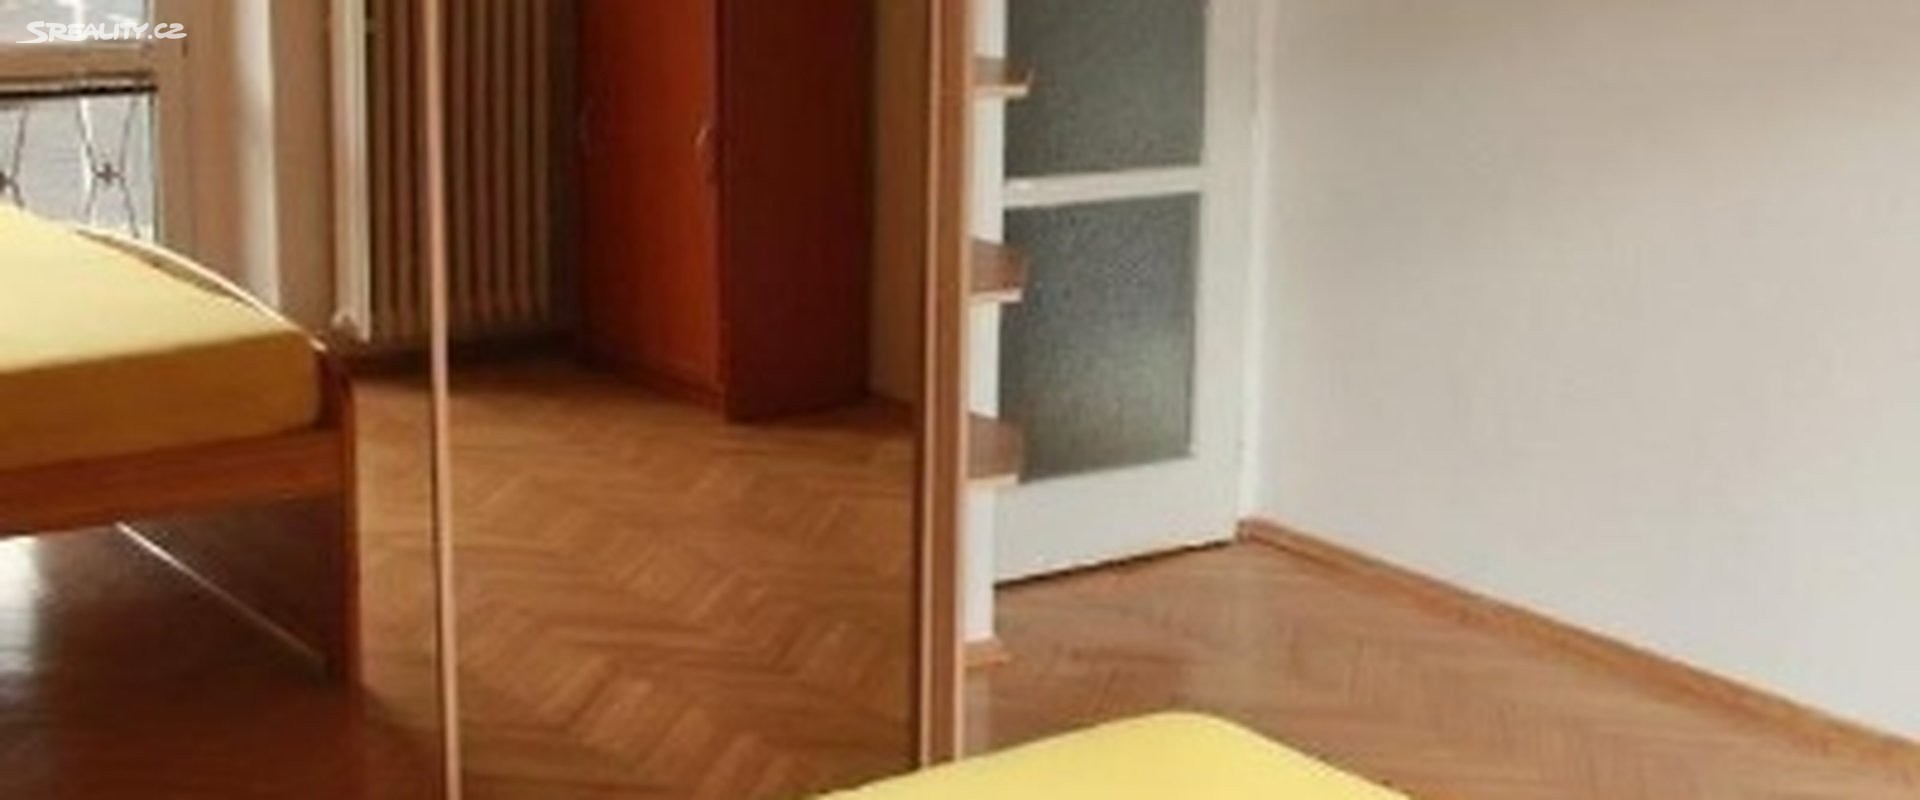 Pronájem bytu 2+1 69 m², Praha 4 - Podolí